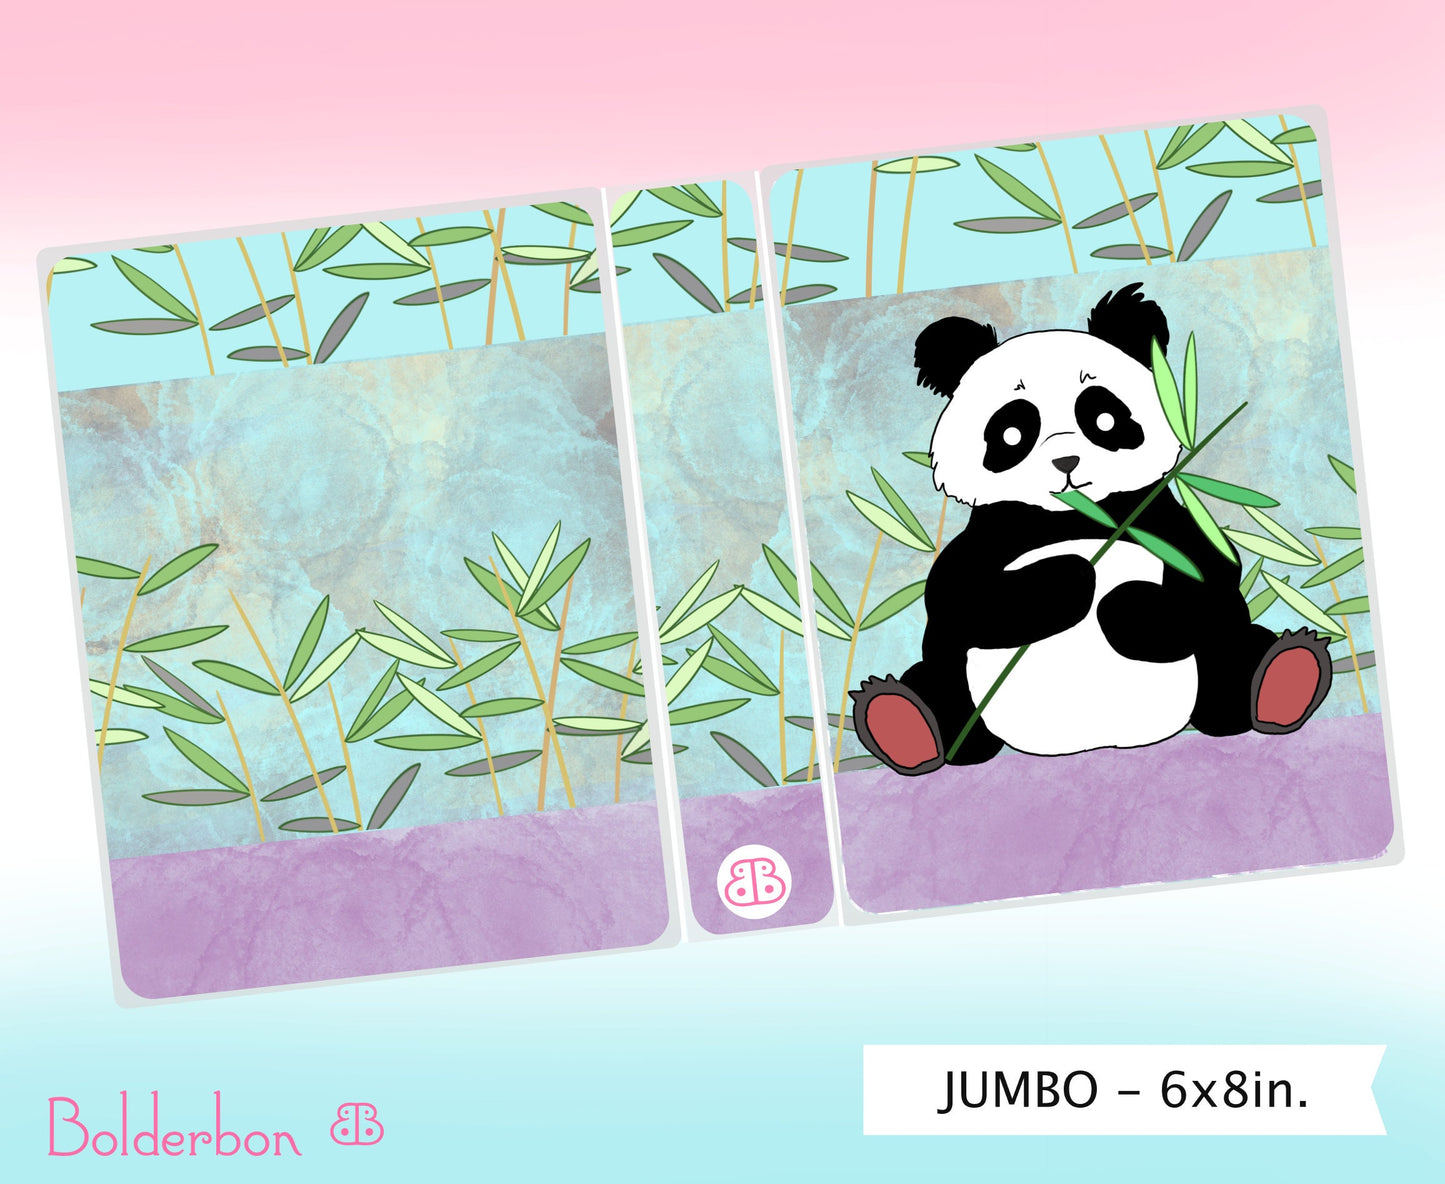 BAMBOO PANDA || Sleeve Sticker Album